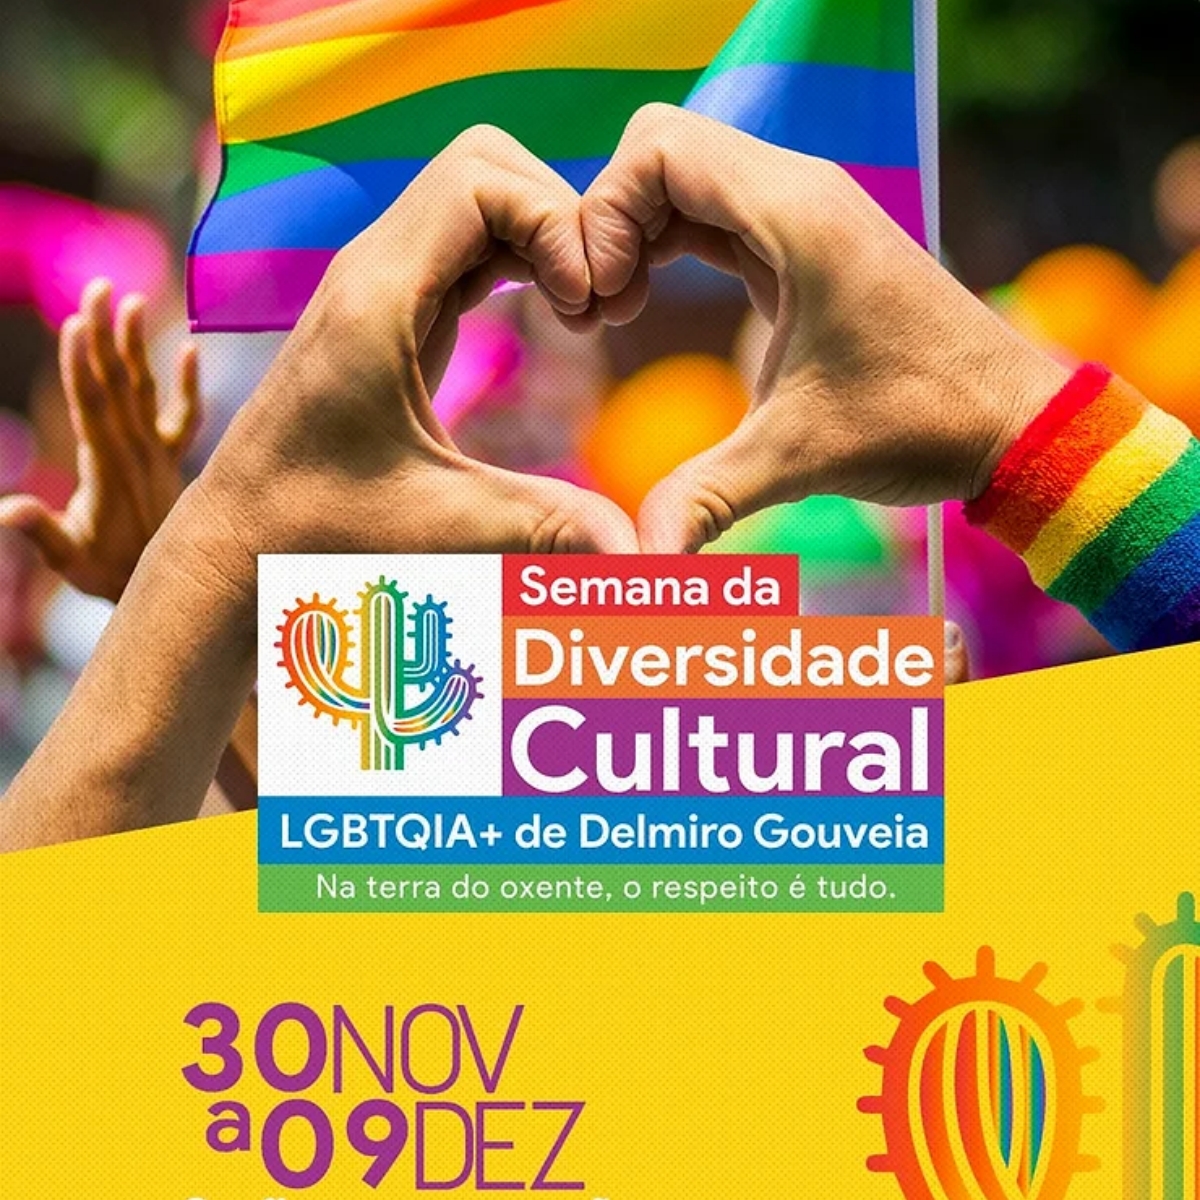 Semana da Diversidade Cultural vai discutir avanços para público LGBTQIAPN+